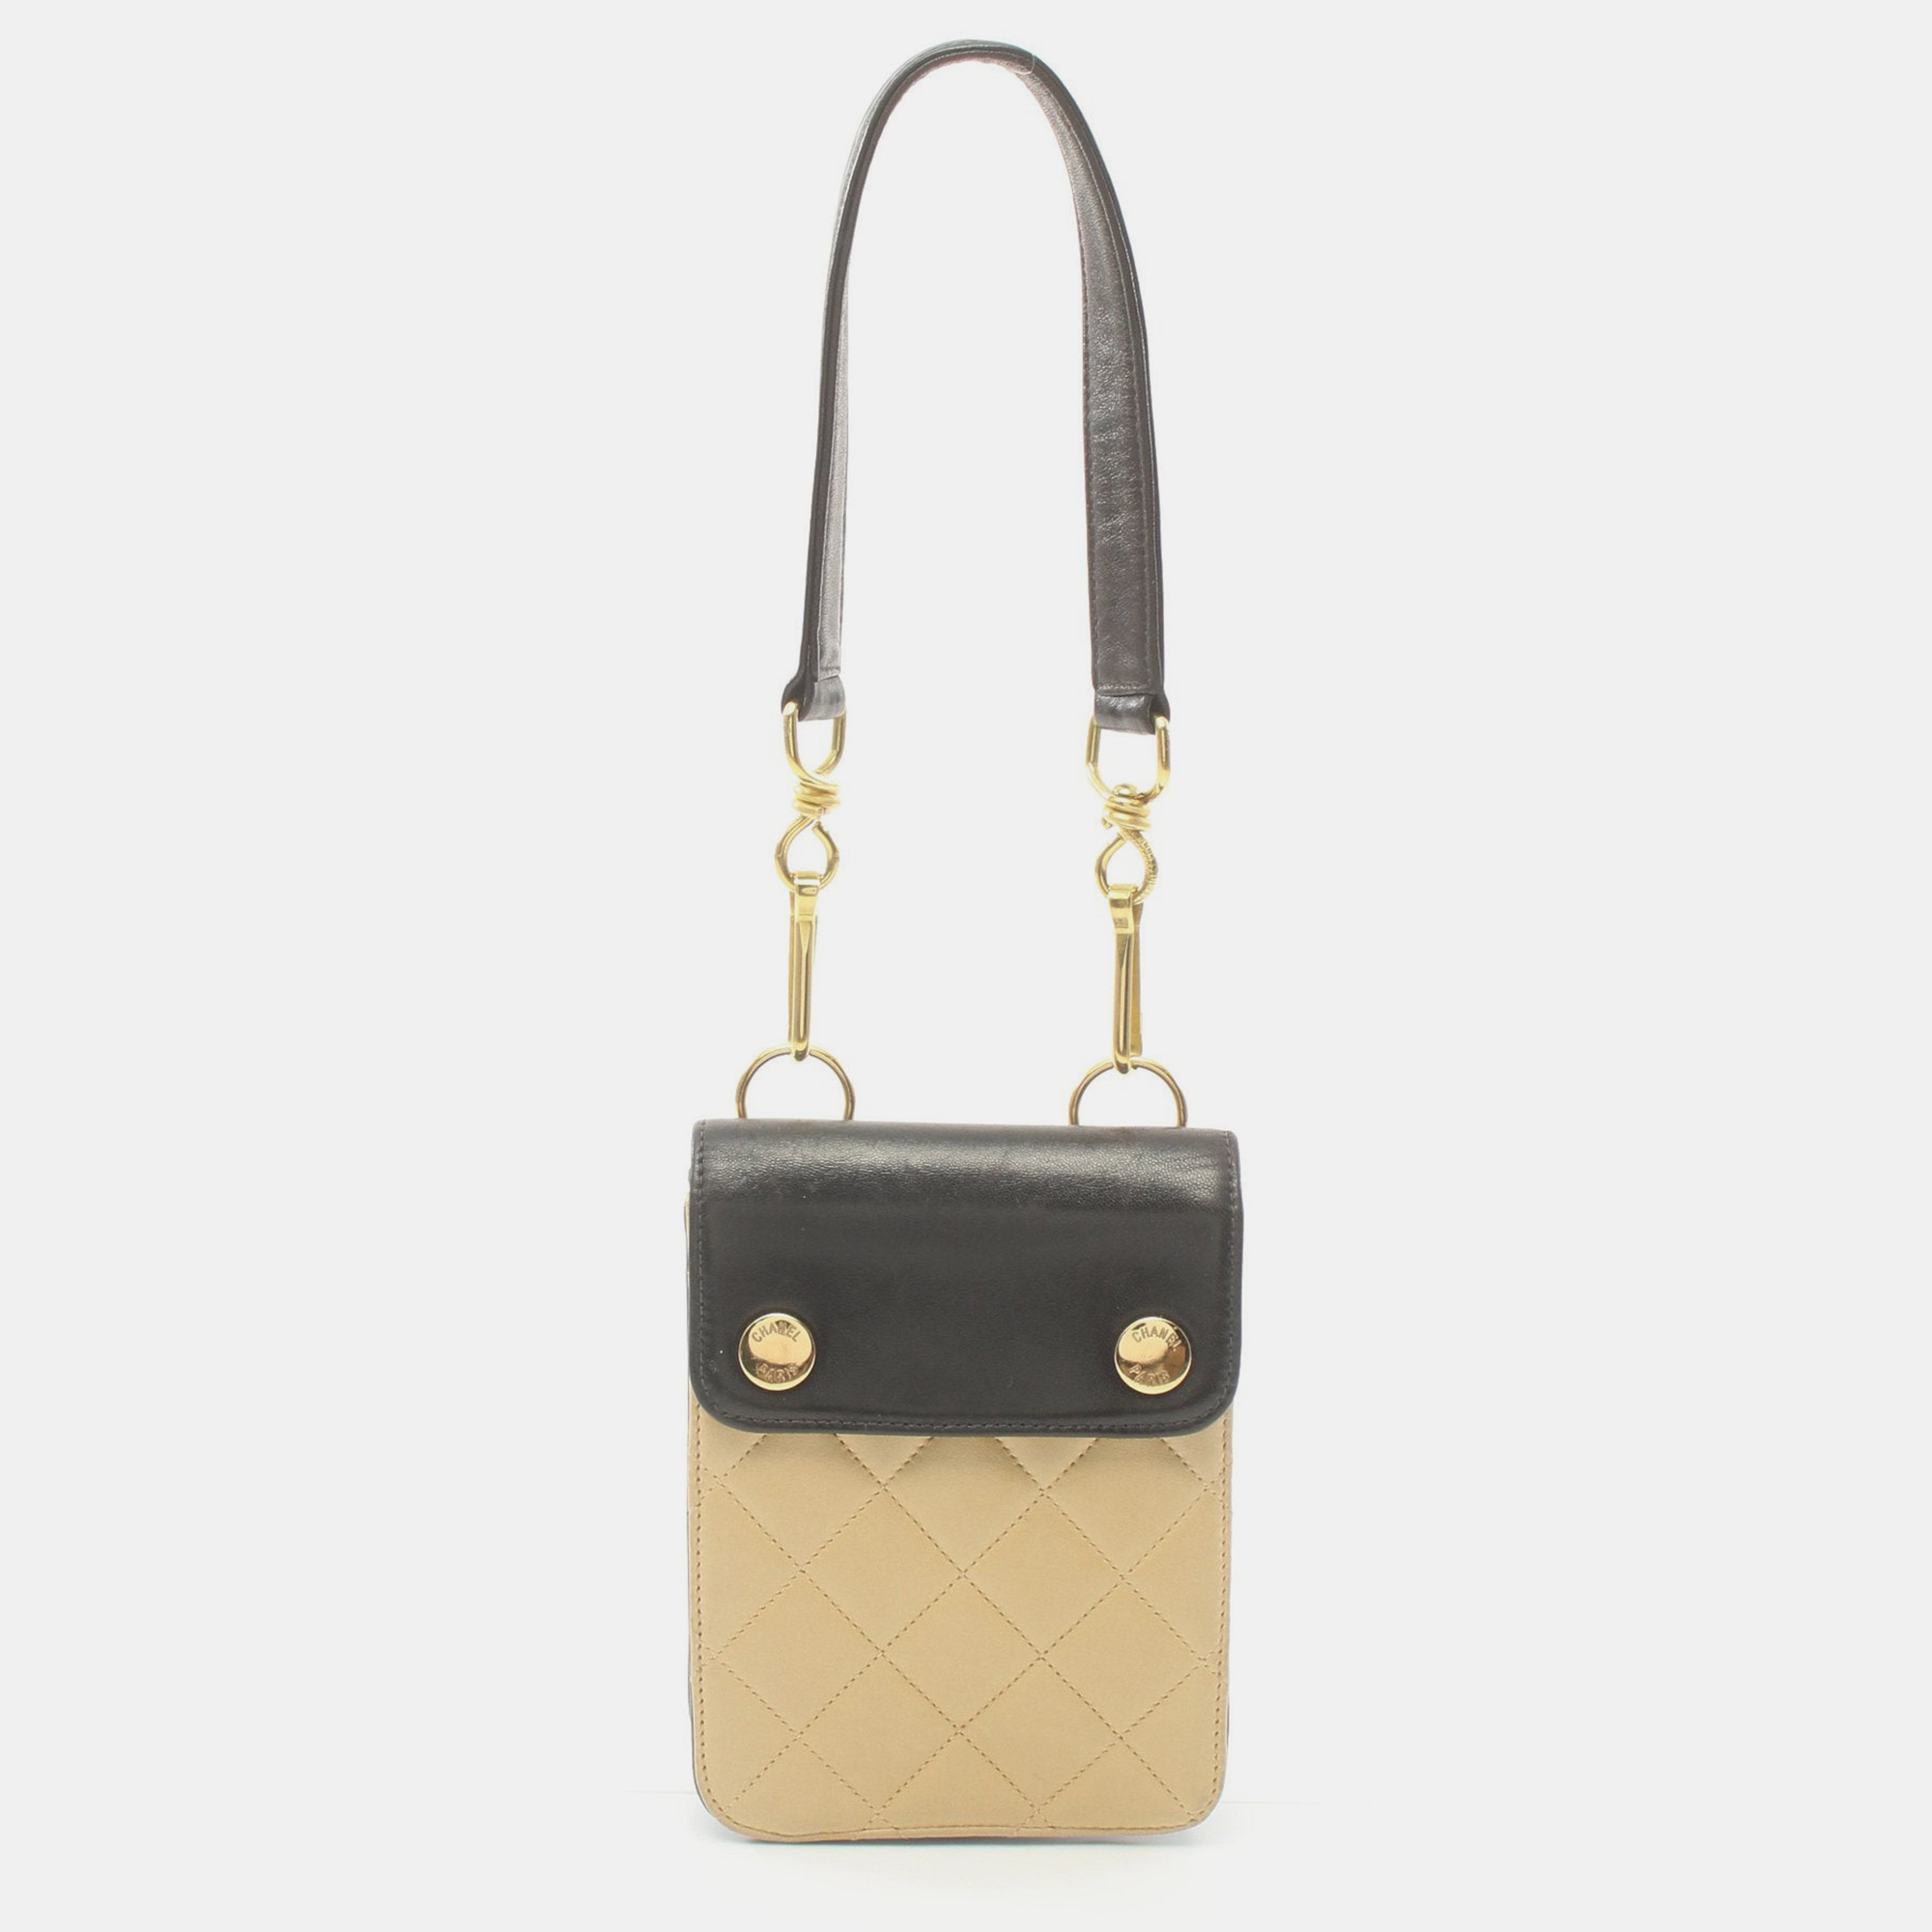 Chanel pochette handbag lambskin beige black gold hardware